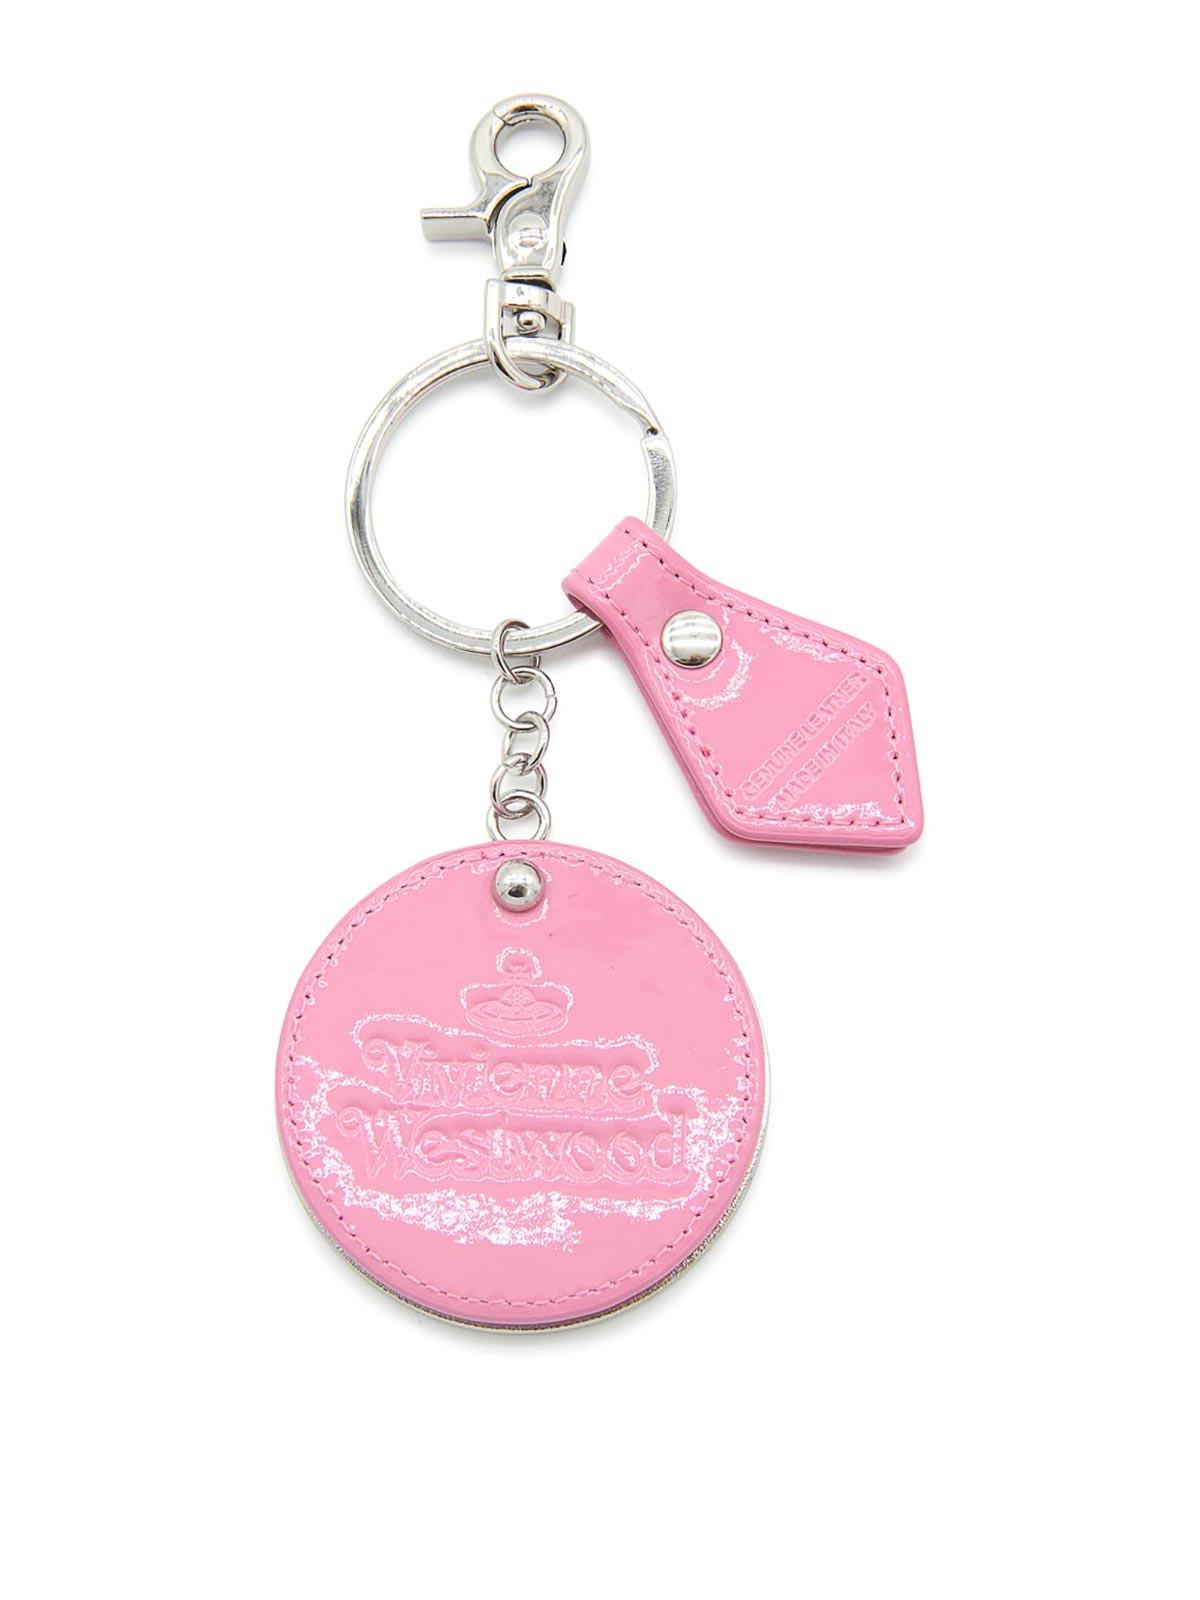 Rings Vivienne Westwood - Shiny pink metal key ring - 82030102UOM000GG406